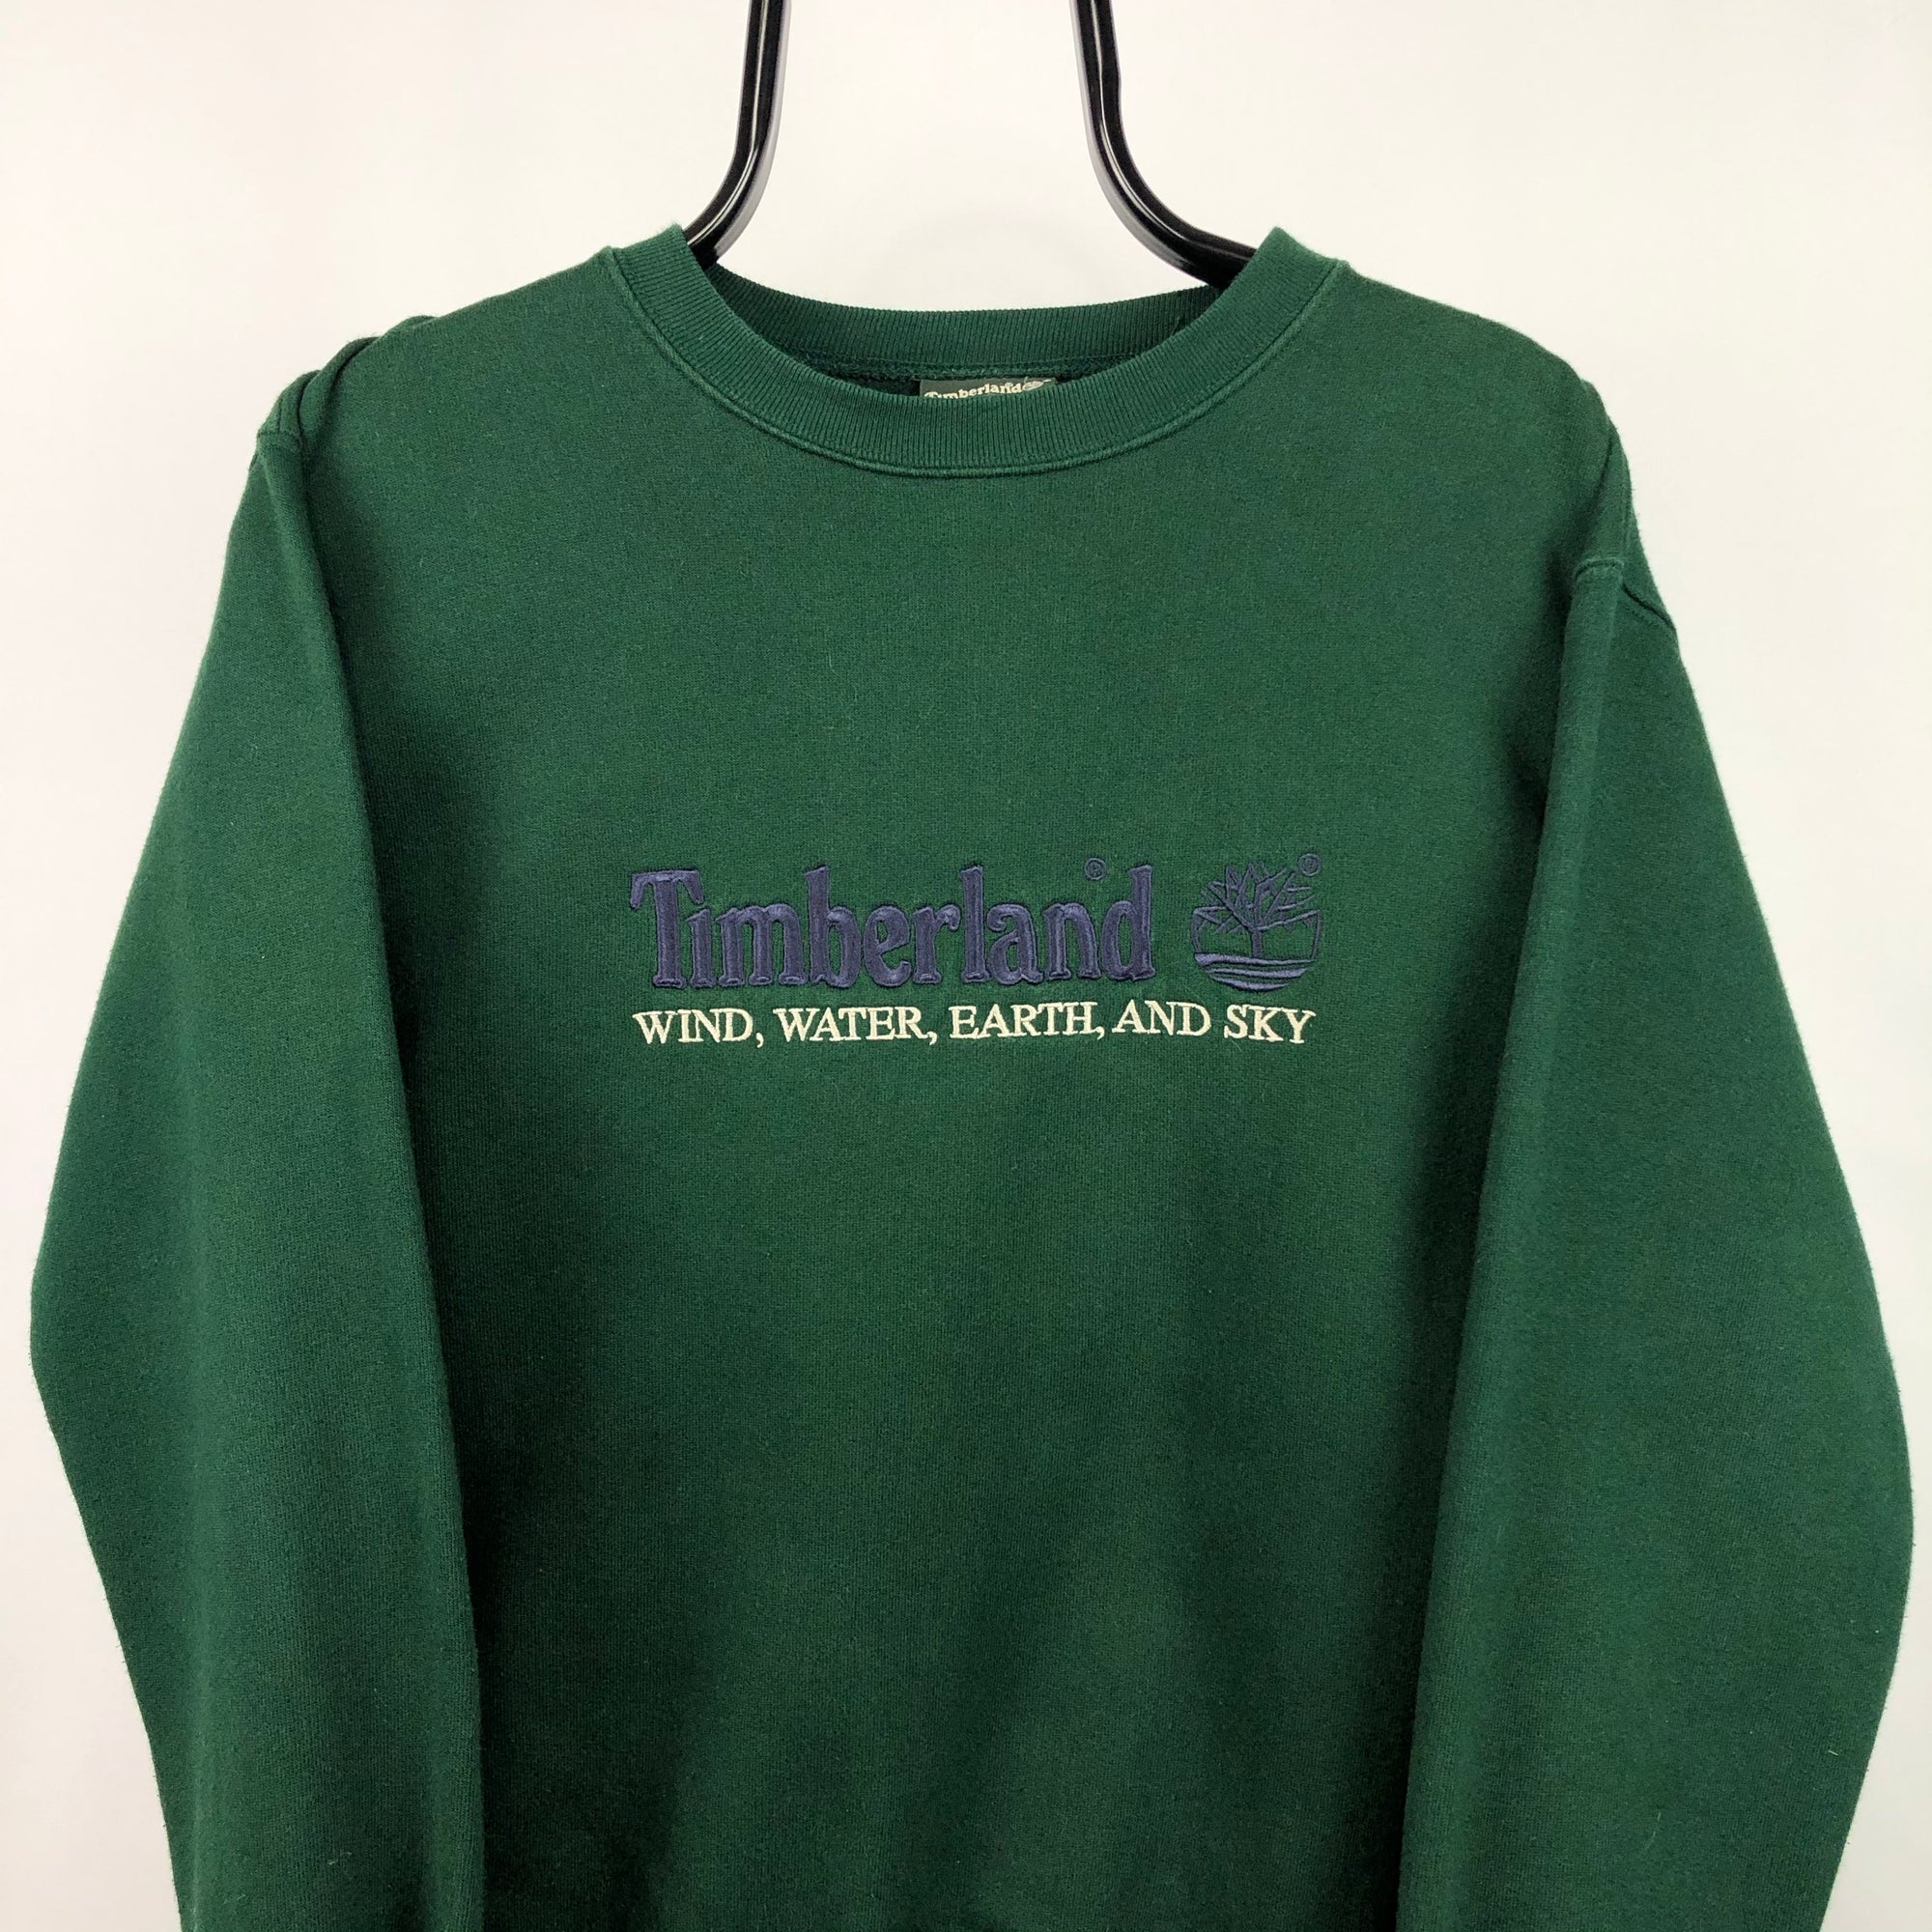 Vintage 90s Timberland Spellout Sweatshirt in Green - Men’s XS/Women’s Small